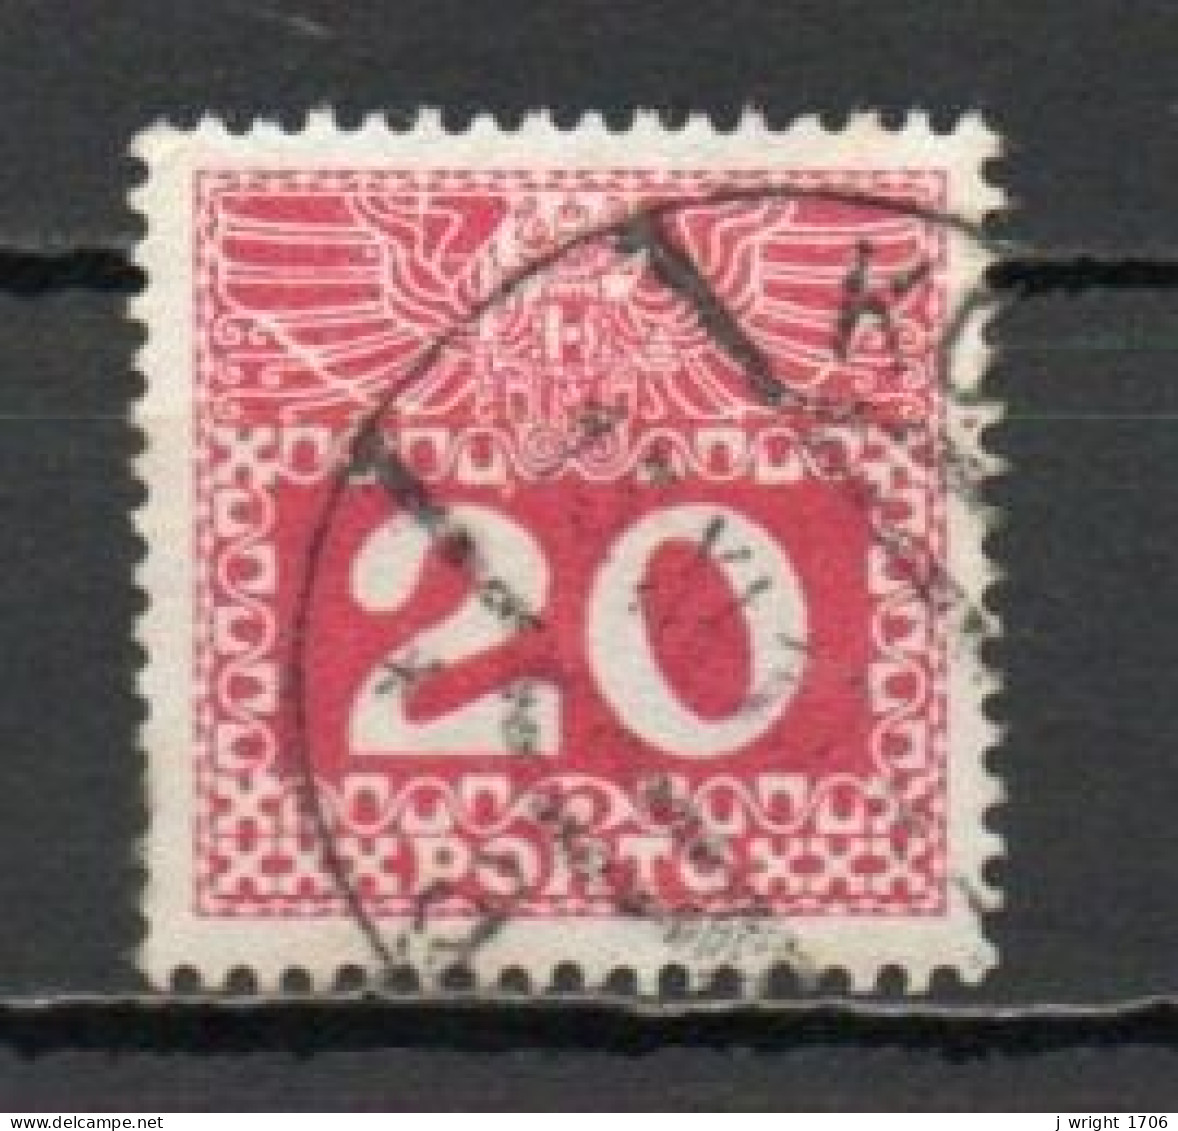 Austria, 1908, Coat Of Arms & Numeral, 20h, USED - Portomarken